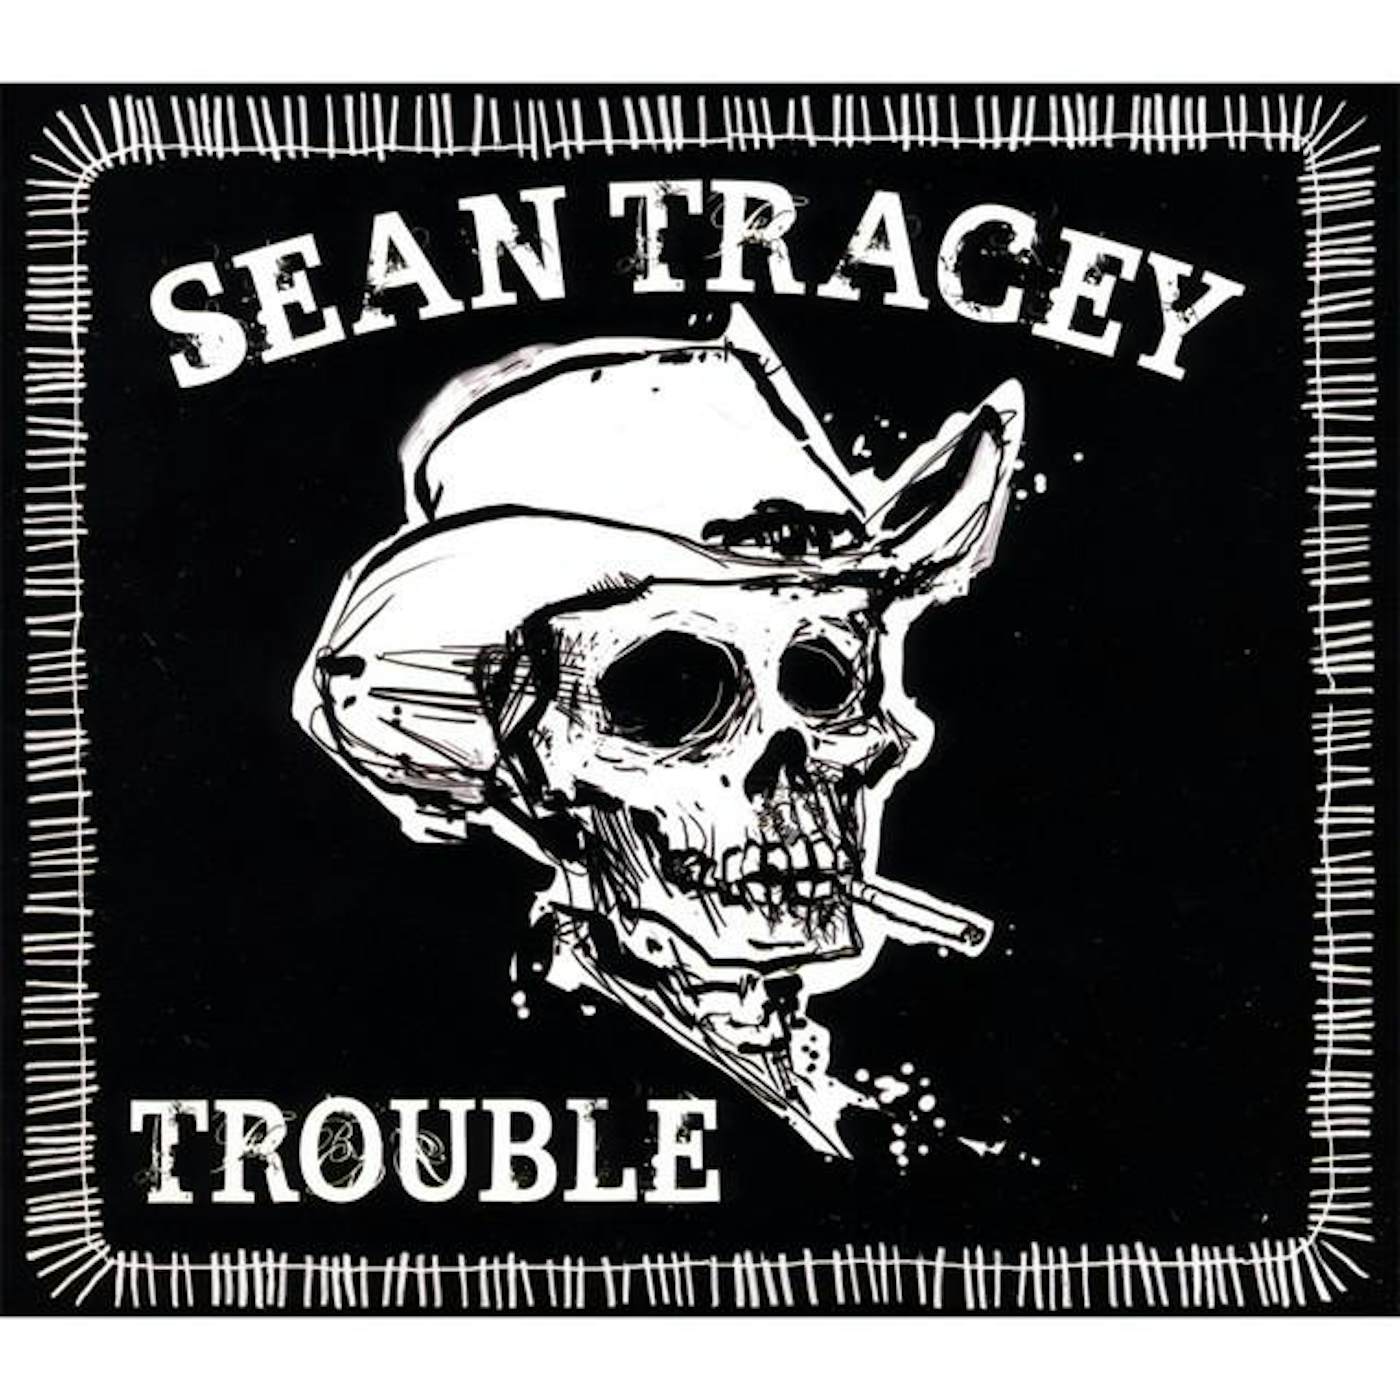 Sean Tracey